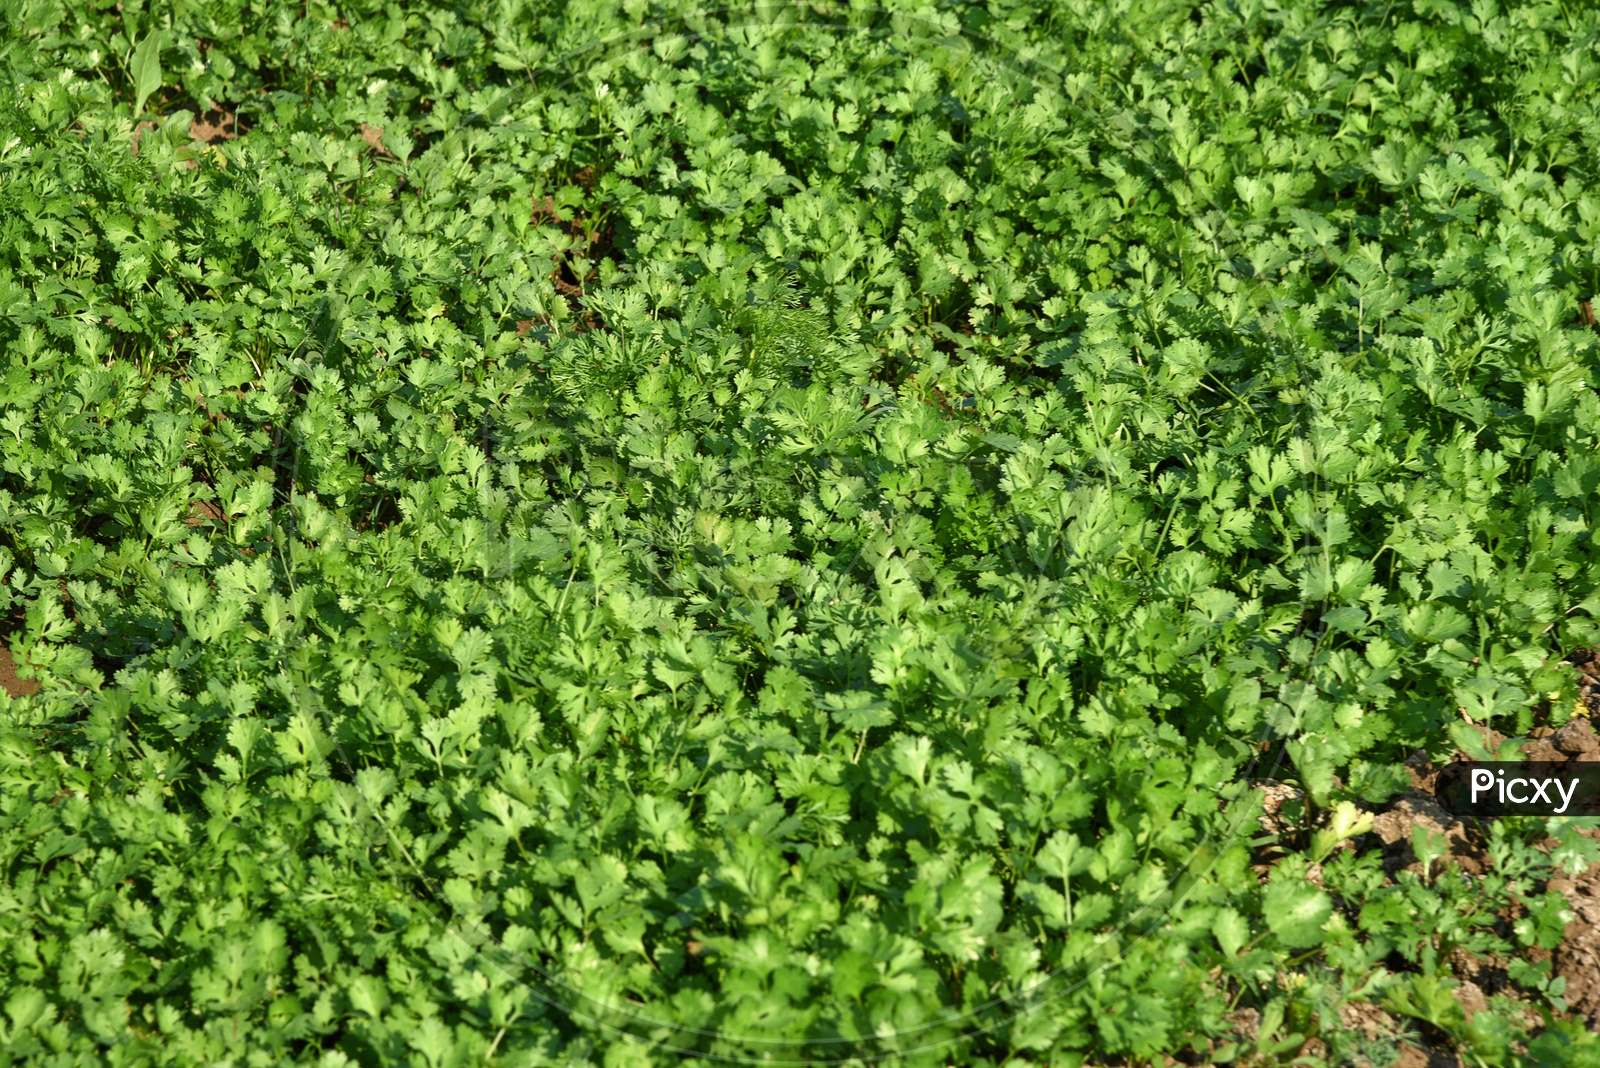 Fresh Green Coriander Growing In Garden Or Farm